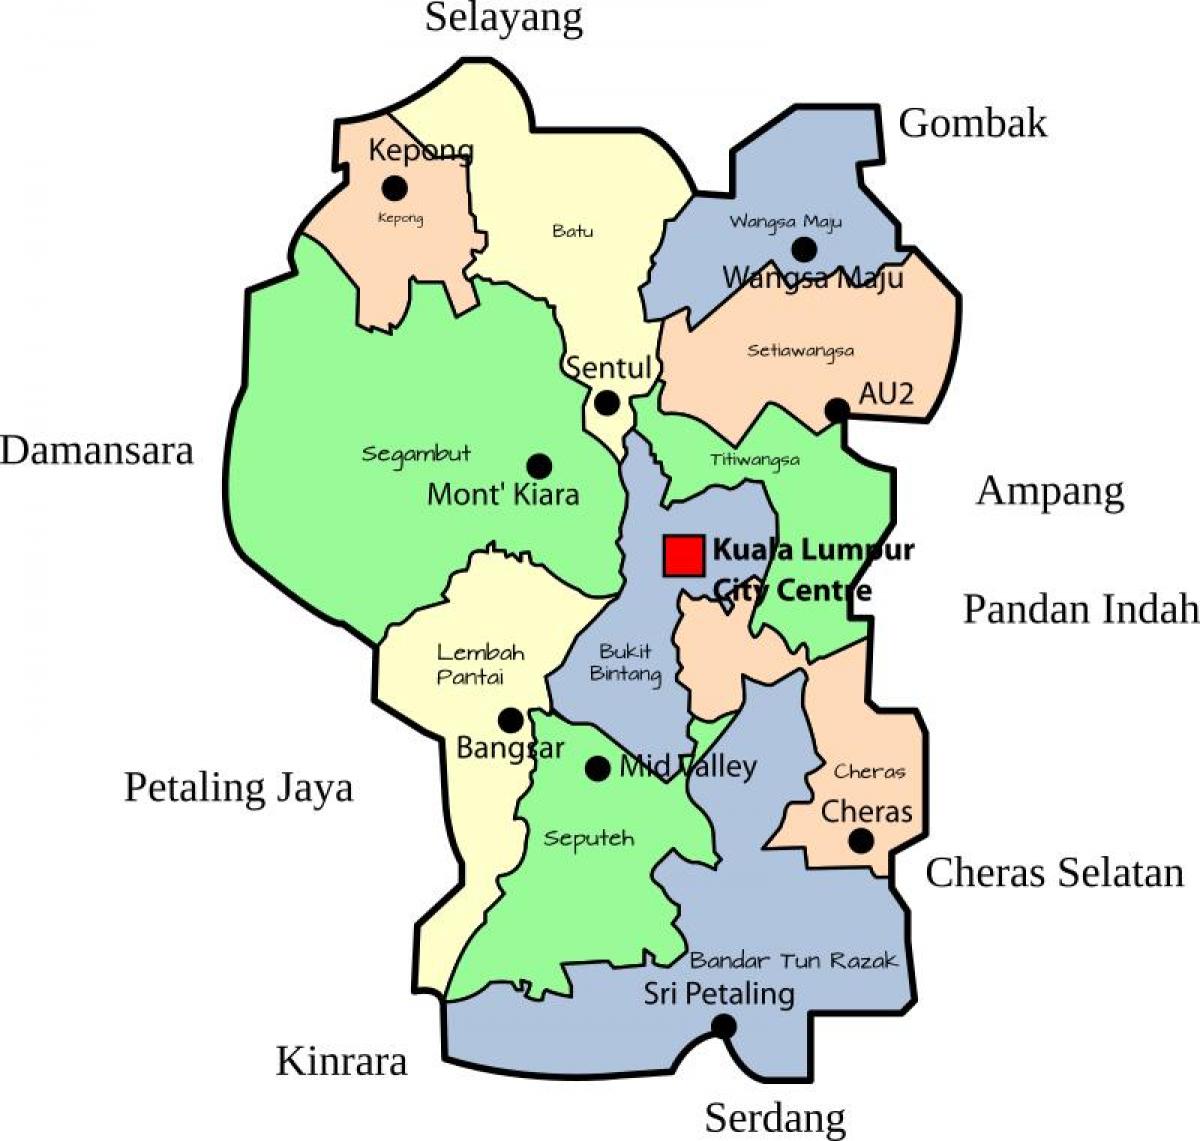 Mapa do distrito de Kuala Lumpur (KL)